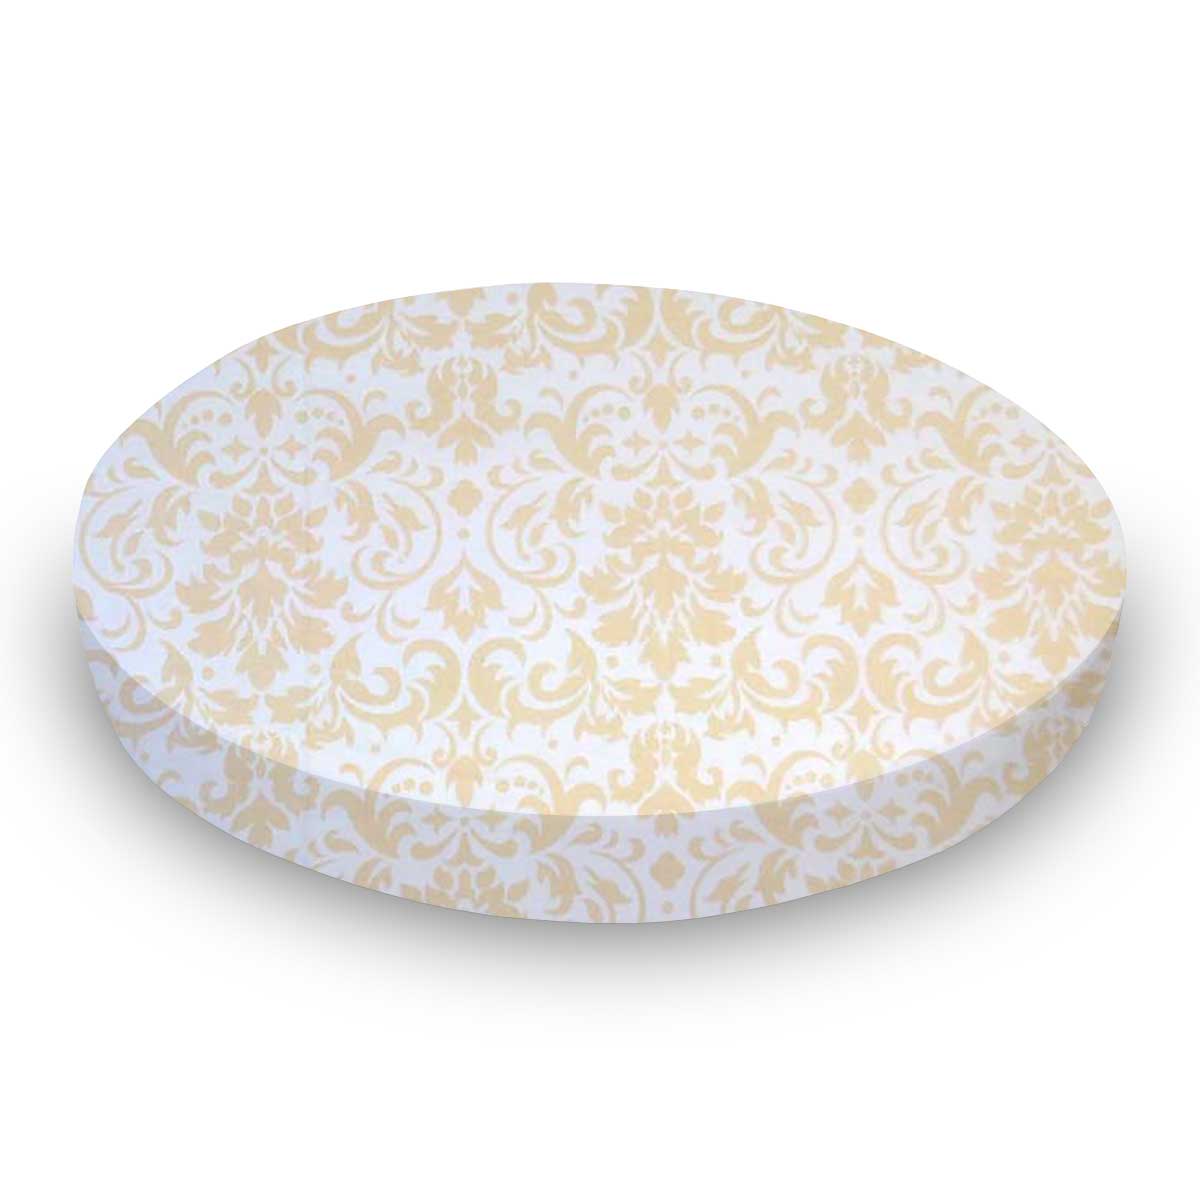 Oval Crib (Stokke Sleepi) - Cream Damask - Fitted  Oval